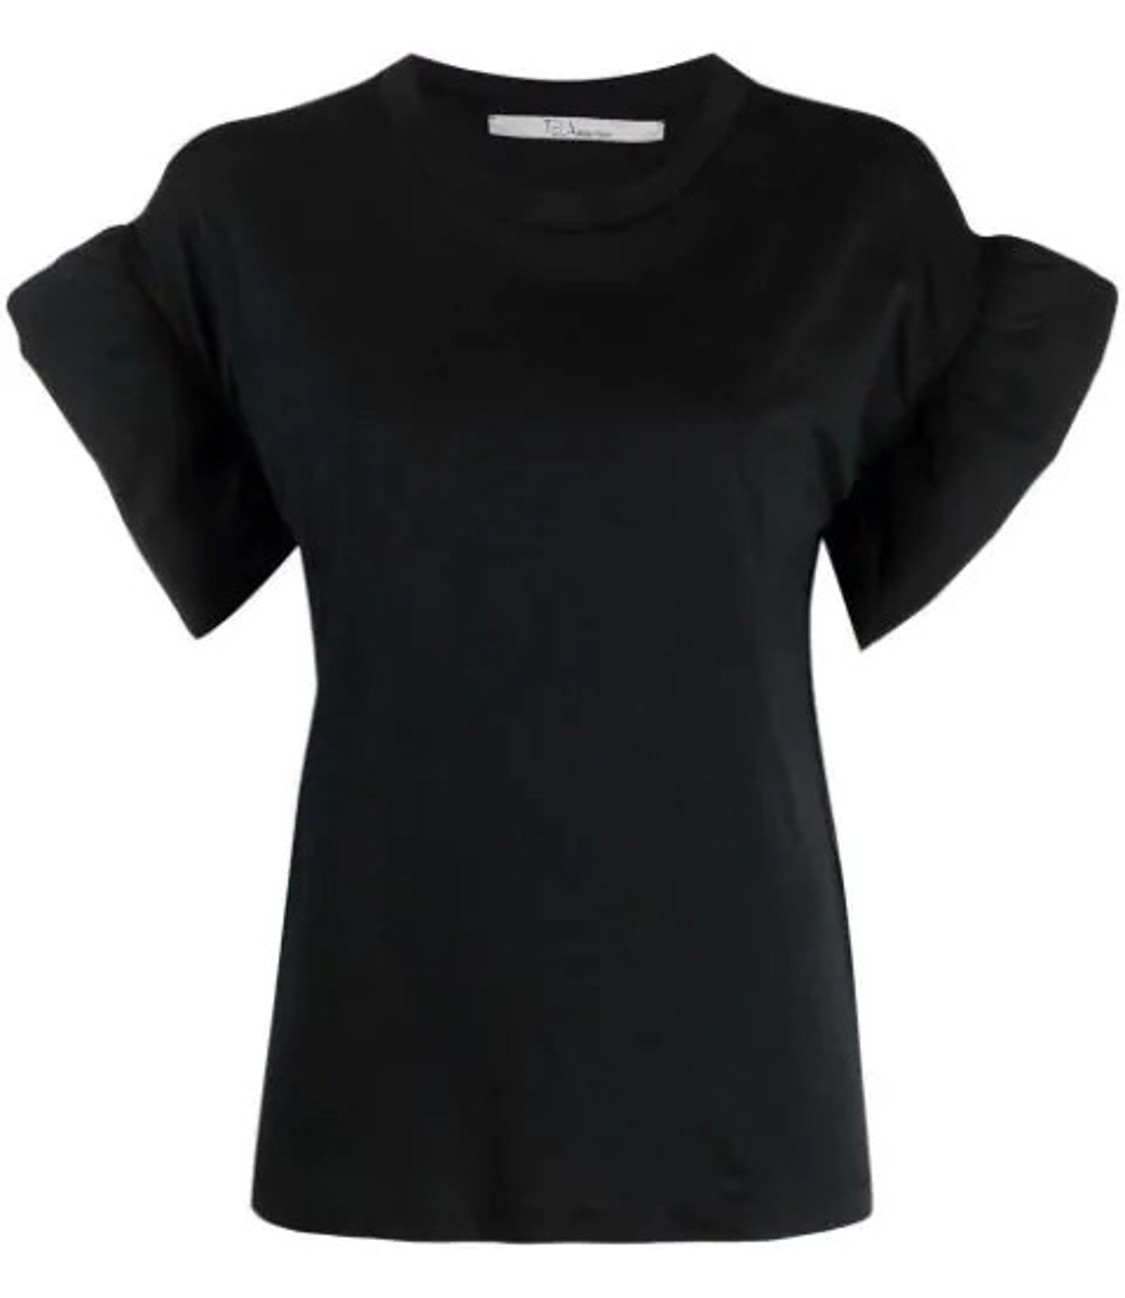 shop Tela Saldi T-shirts: T-shirts Tela, manica corta, girocollo, fit regolare, manica bold.

Composizione: 100% cotone. number 2175